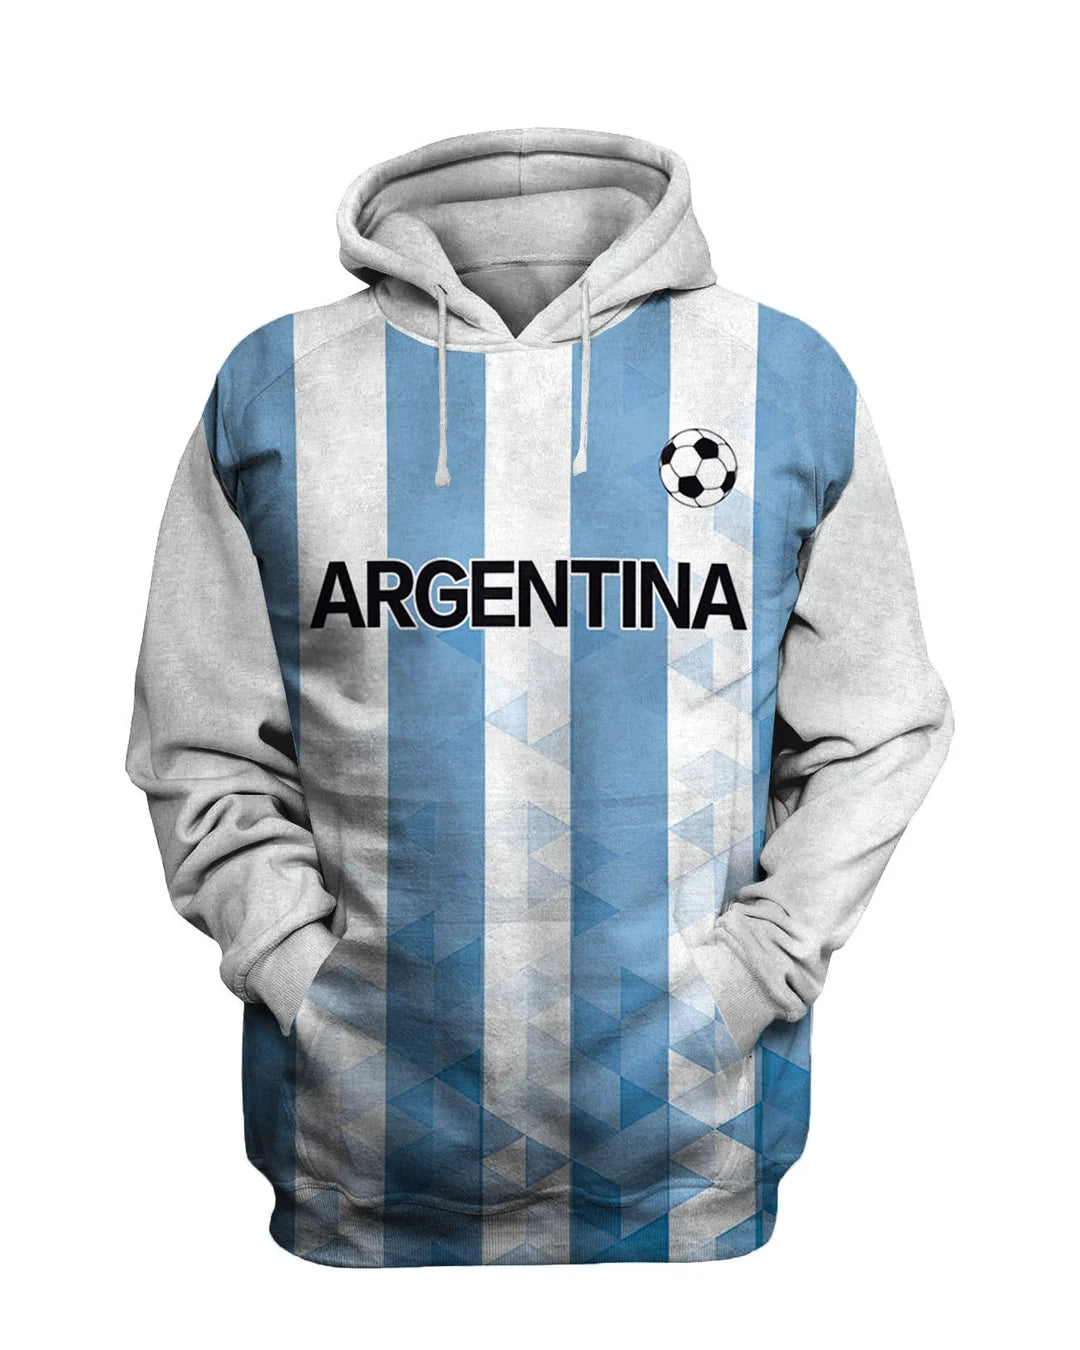 Argentina Printed Sweatshirt Set - DUVAL